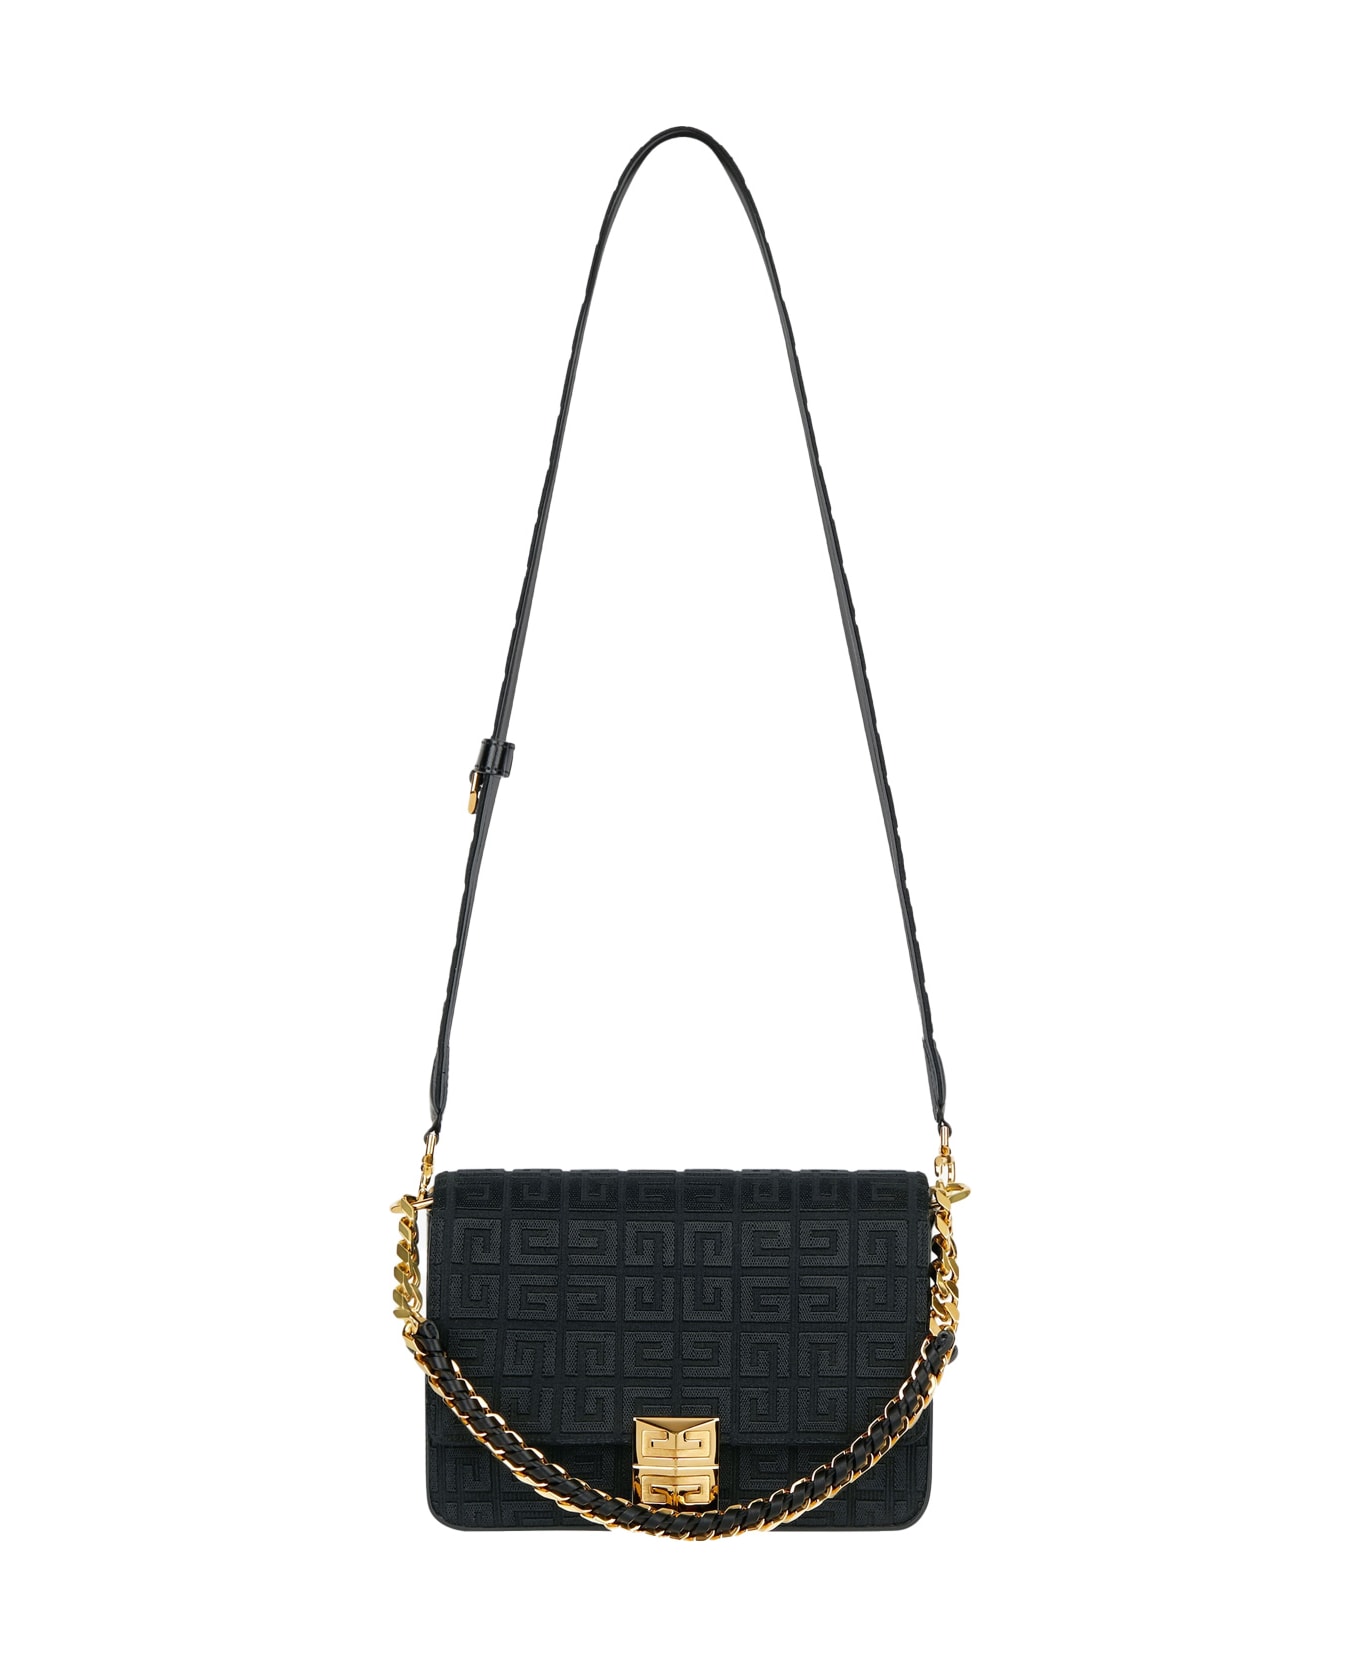 Givenchy 4gcanvas Crossbody Bag - Black